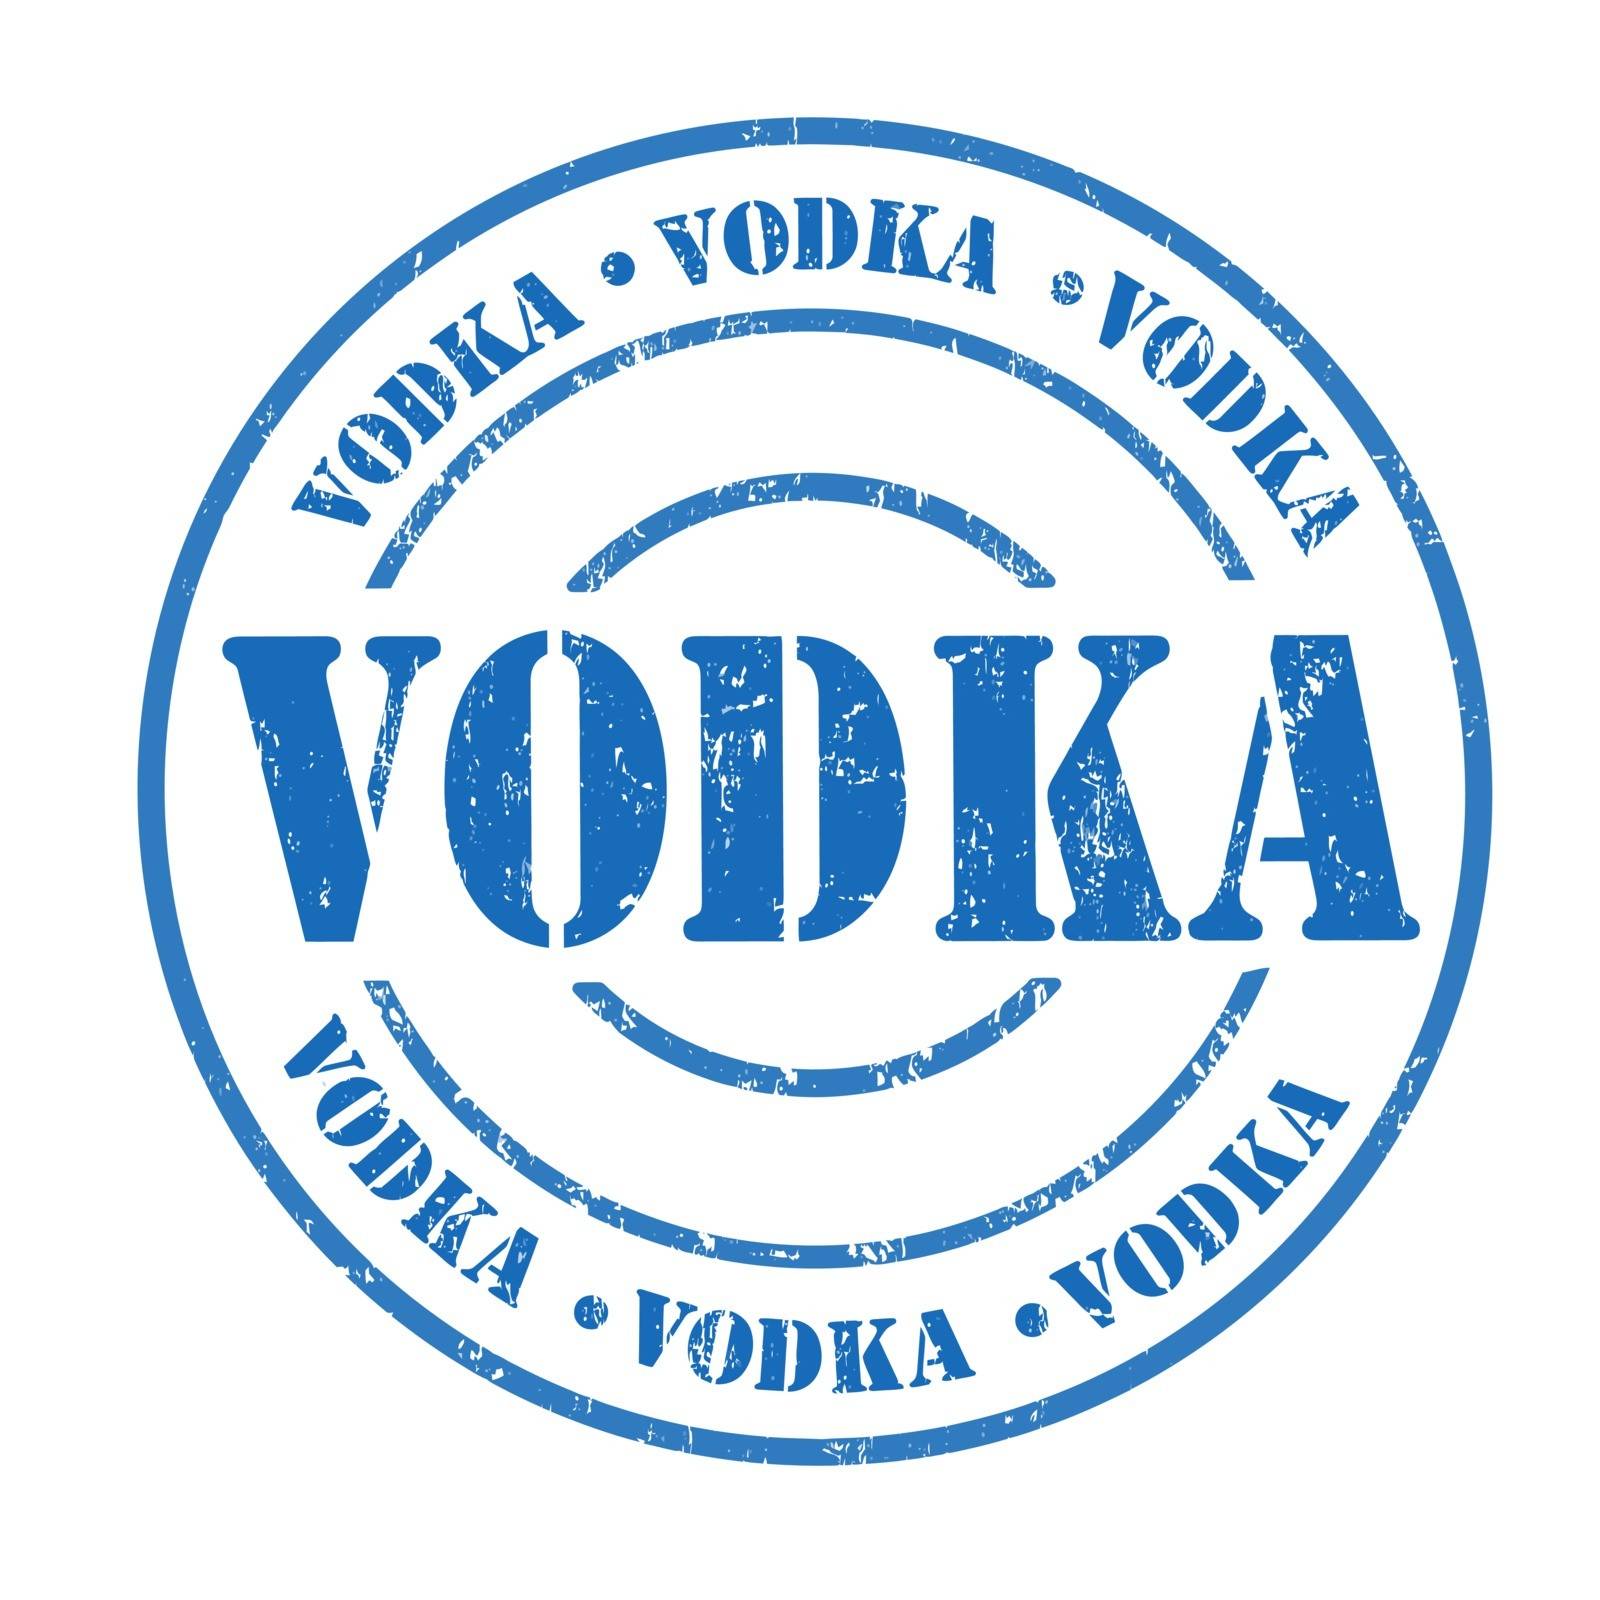 Vodka grunge rubber stamp on white, vector illustration